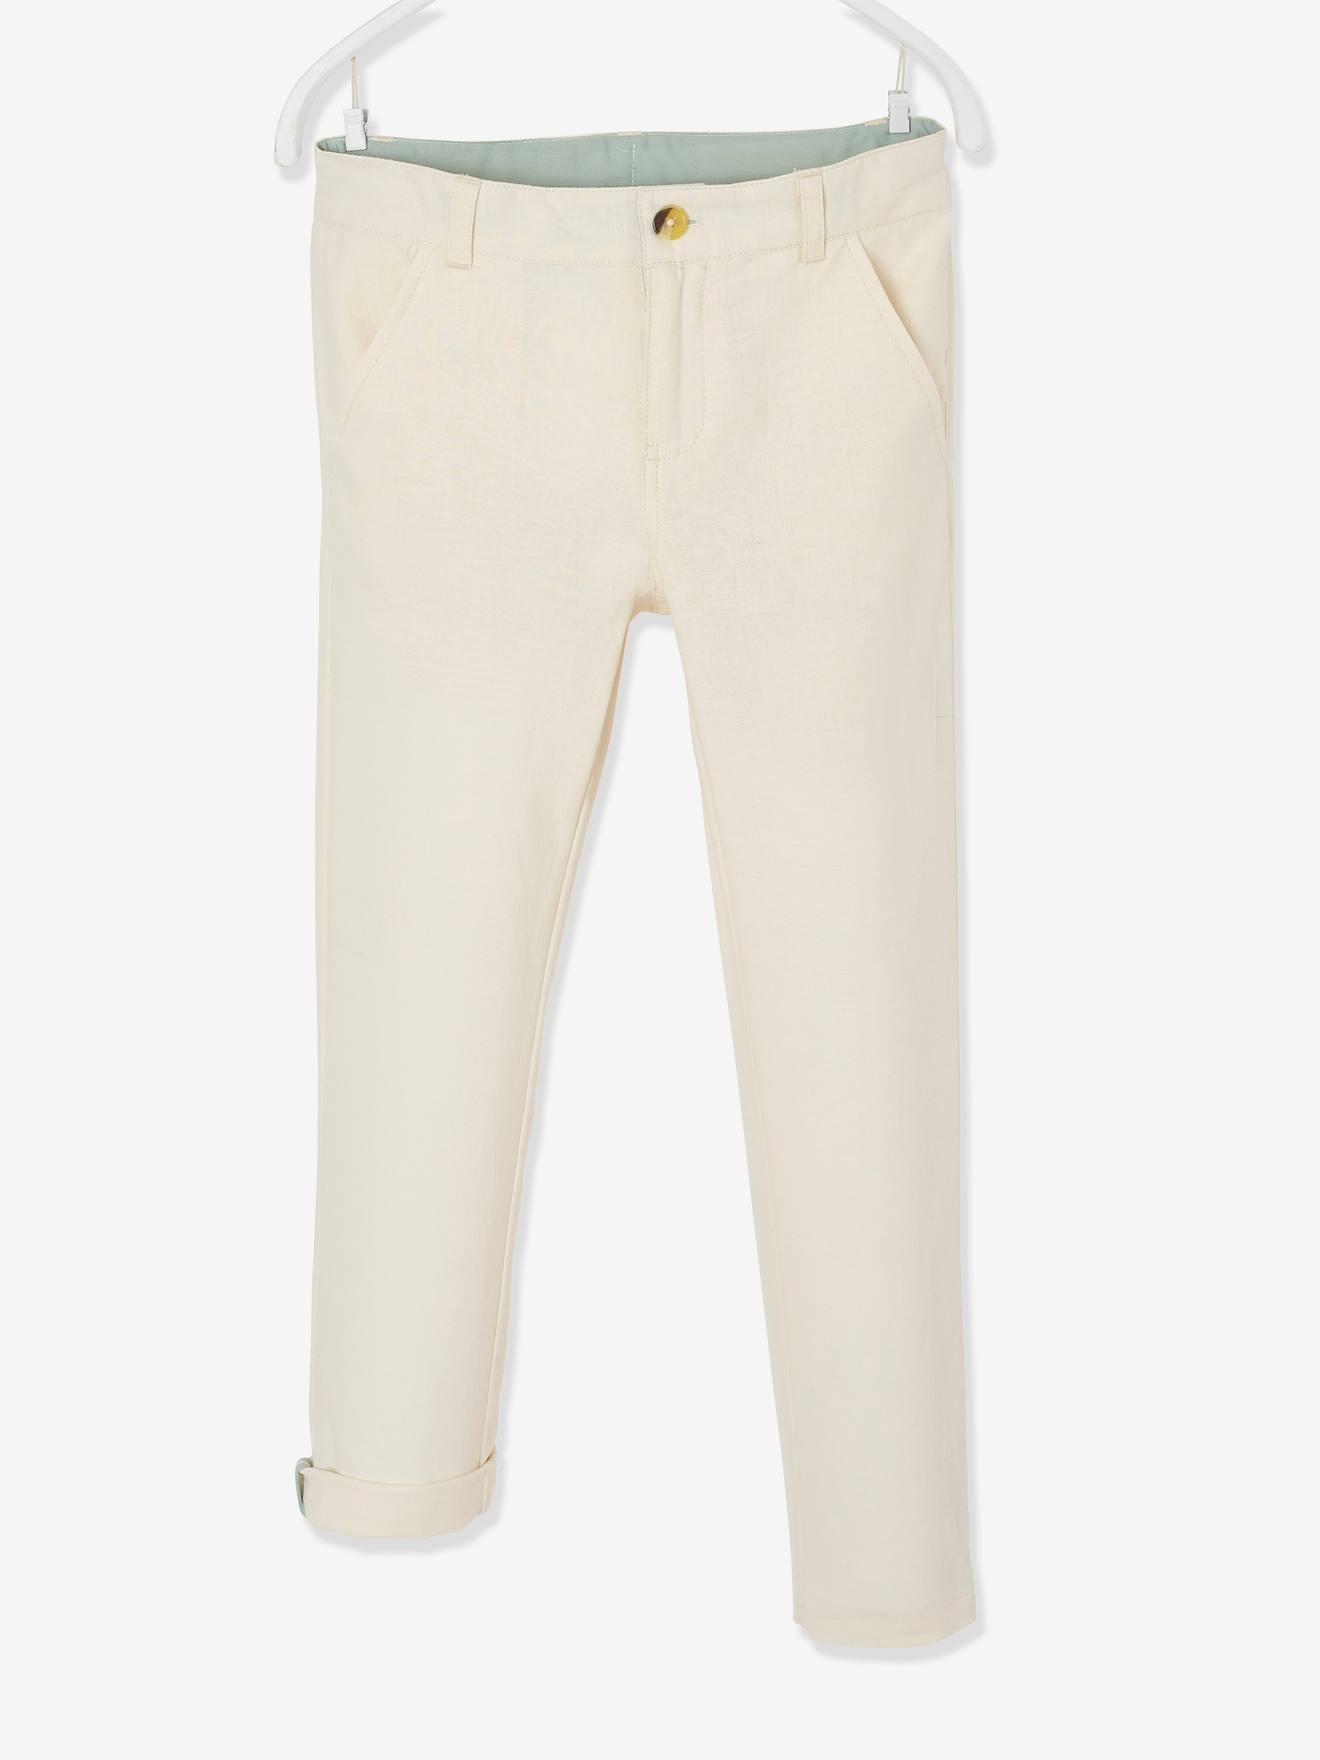 pantalon chino garçon en coton/lin beige clair